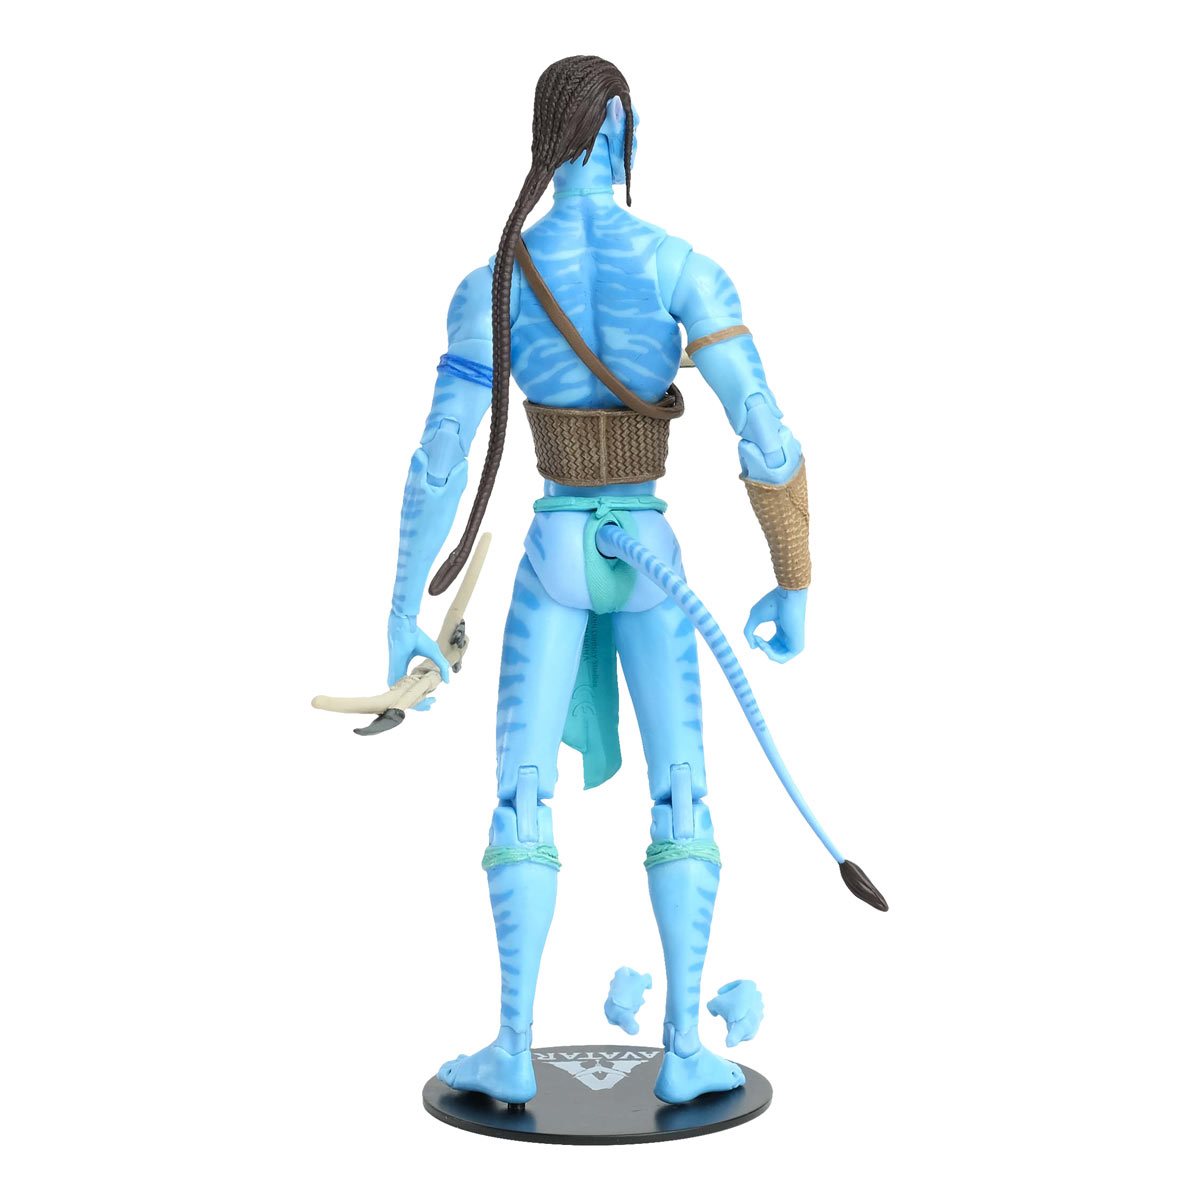 McFarlane Figura de Accion: Disney Avatar - Jake Sully 7 Pulgadas